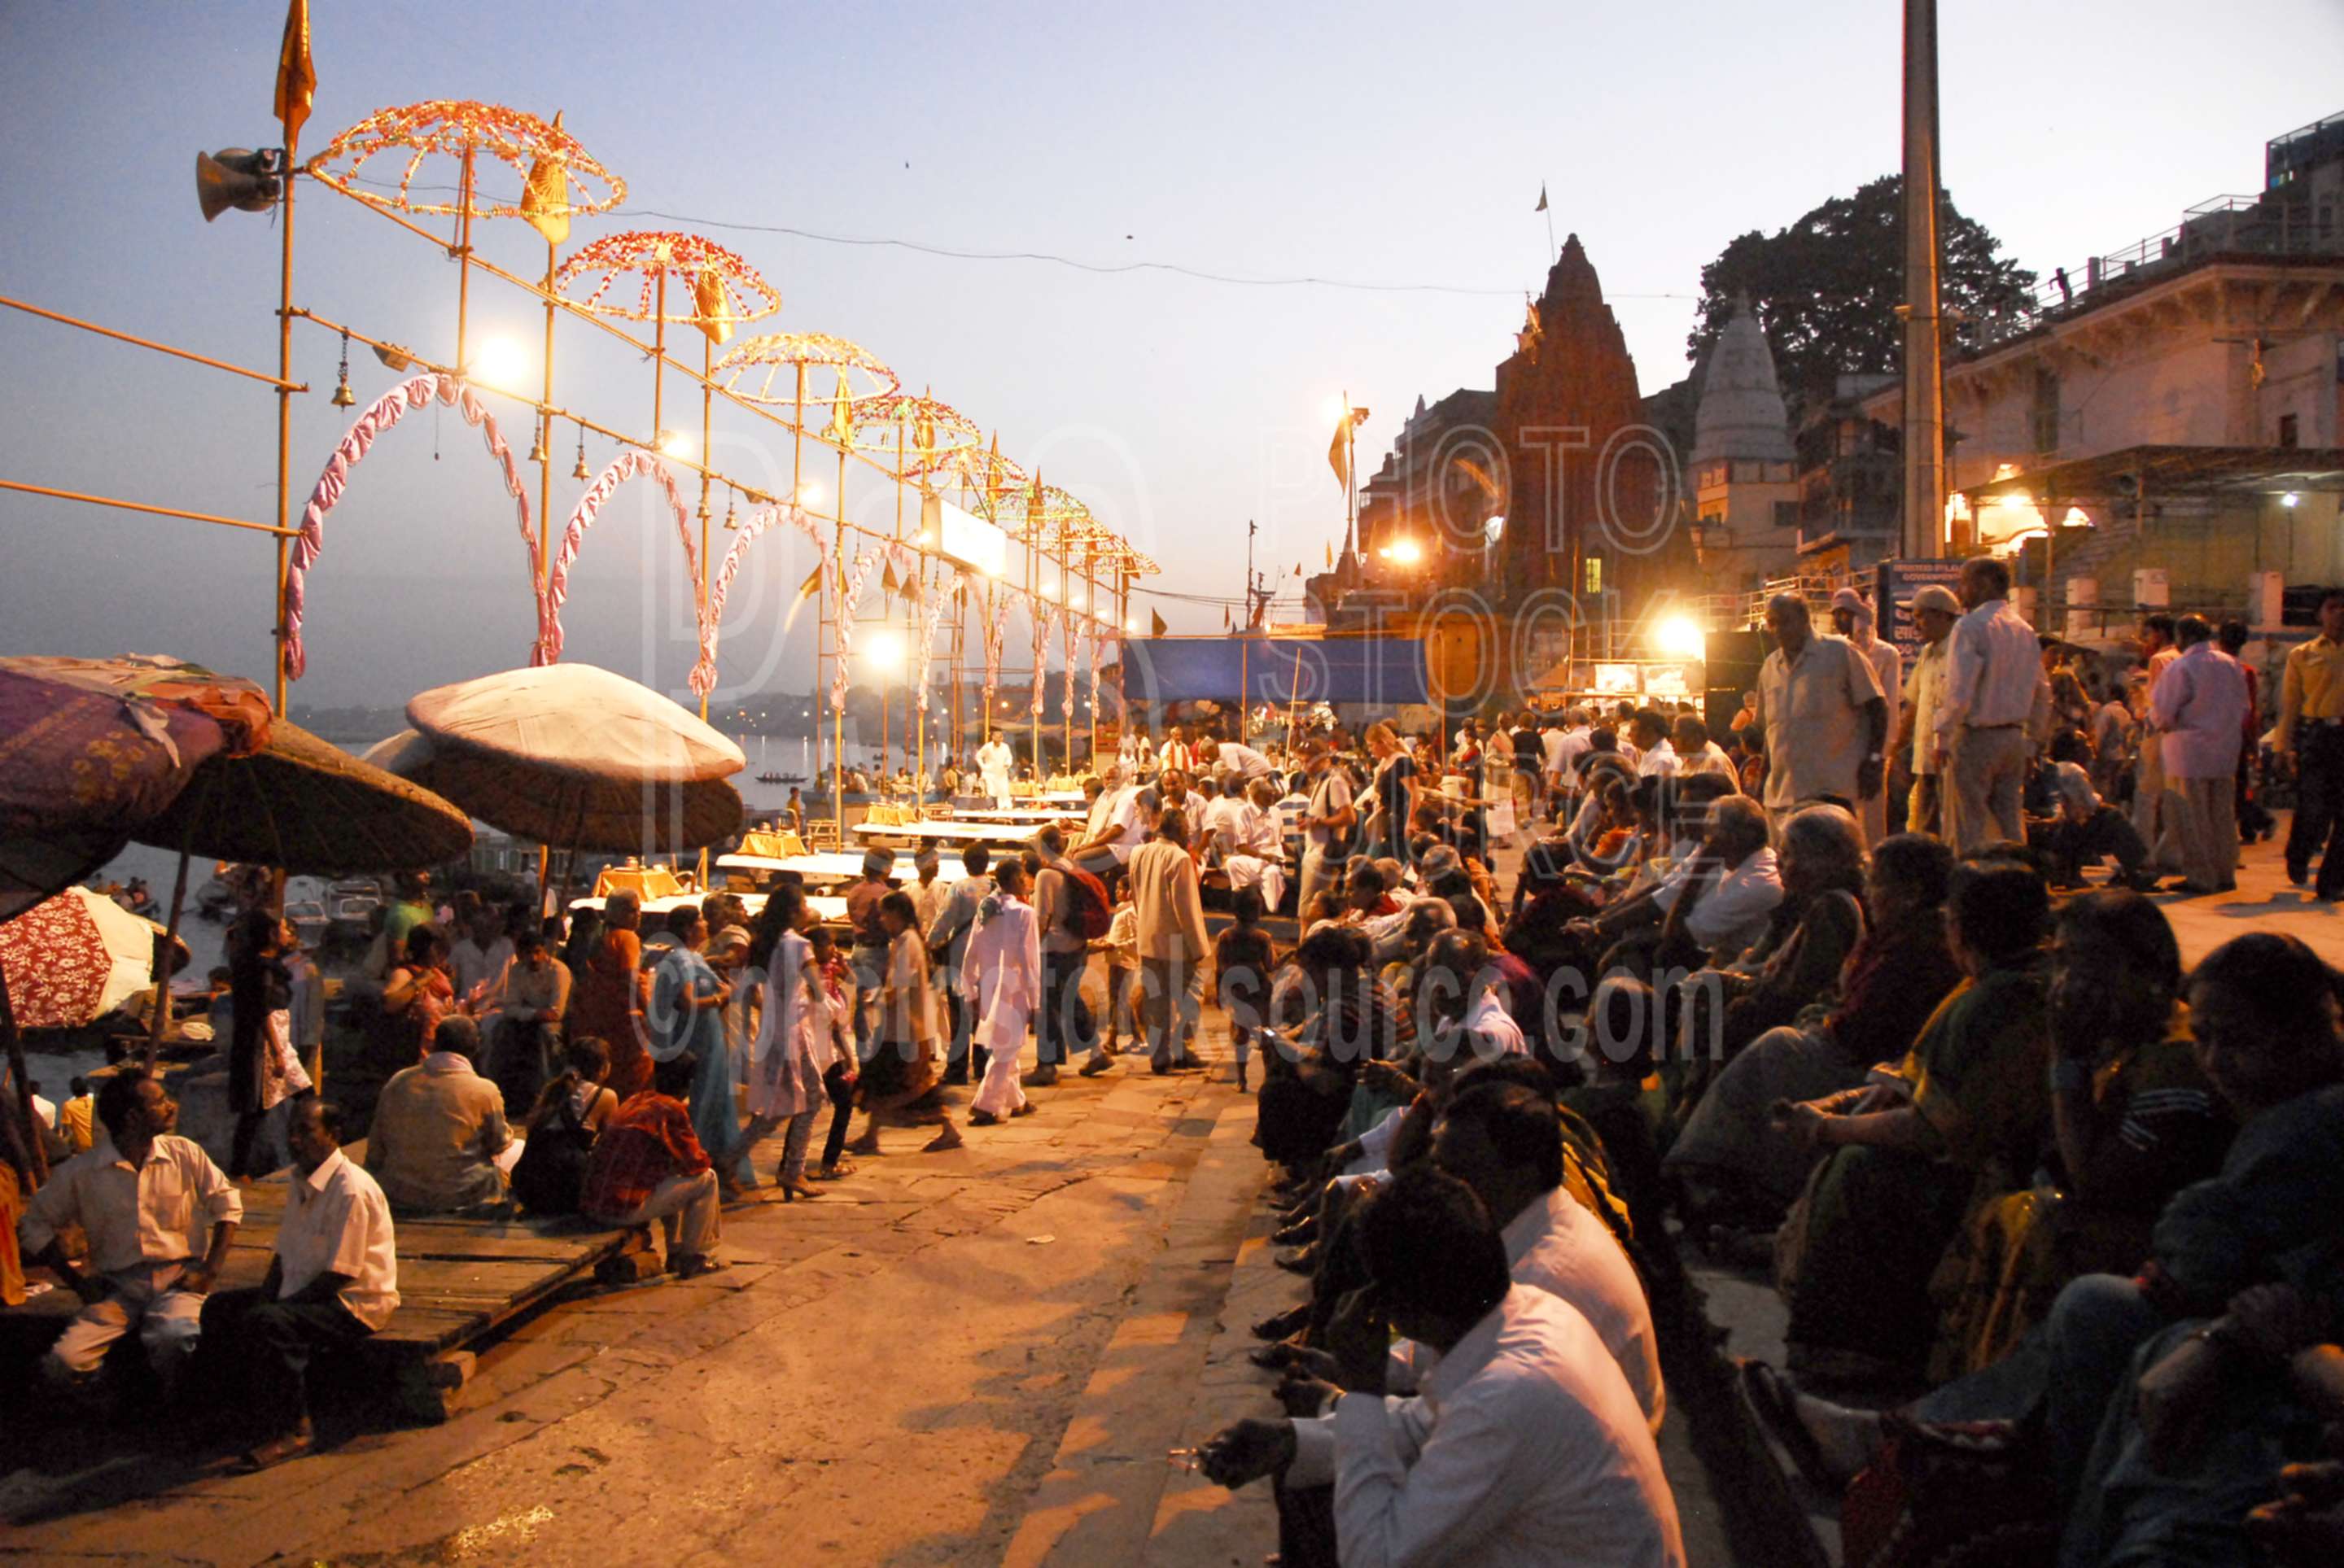 Maa Ganga Aarti,river,ganges,ceremony,celebration,religious,dasaswamedh ghat,ganga arti,aarti,ritual,music,night,ganges river,ceremonies